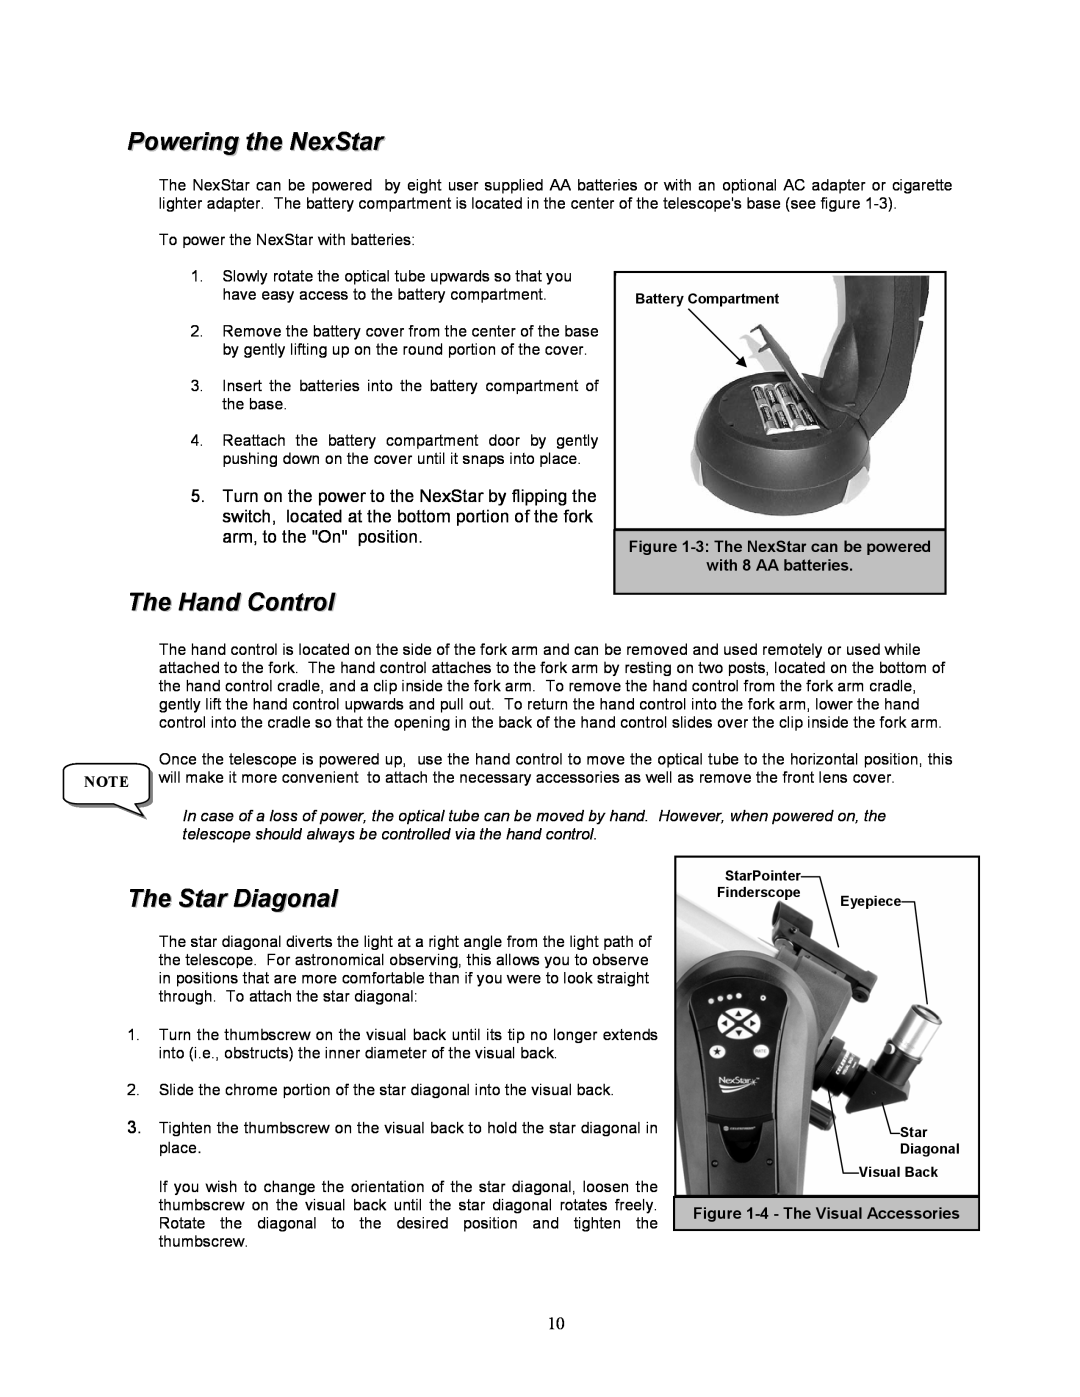 Celestron NexStar 8i manual Powering the NexStar, The Hand Control, The Star Diagonal, 4 - The Visual Accessories 